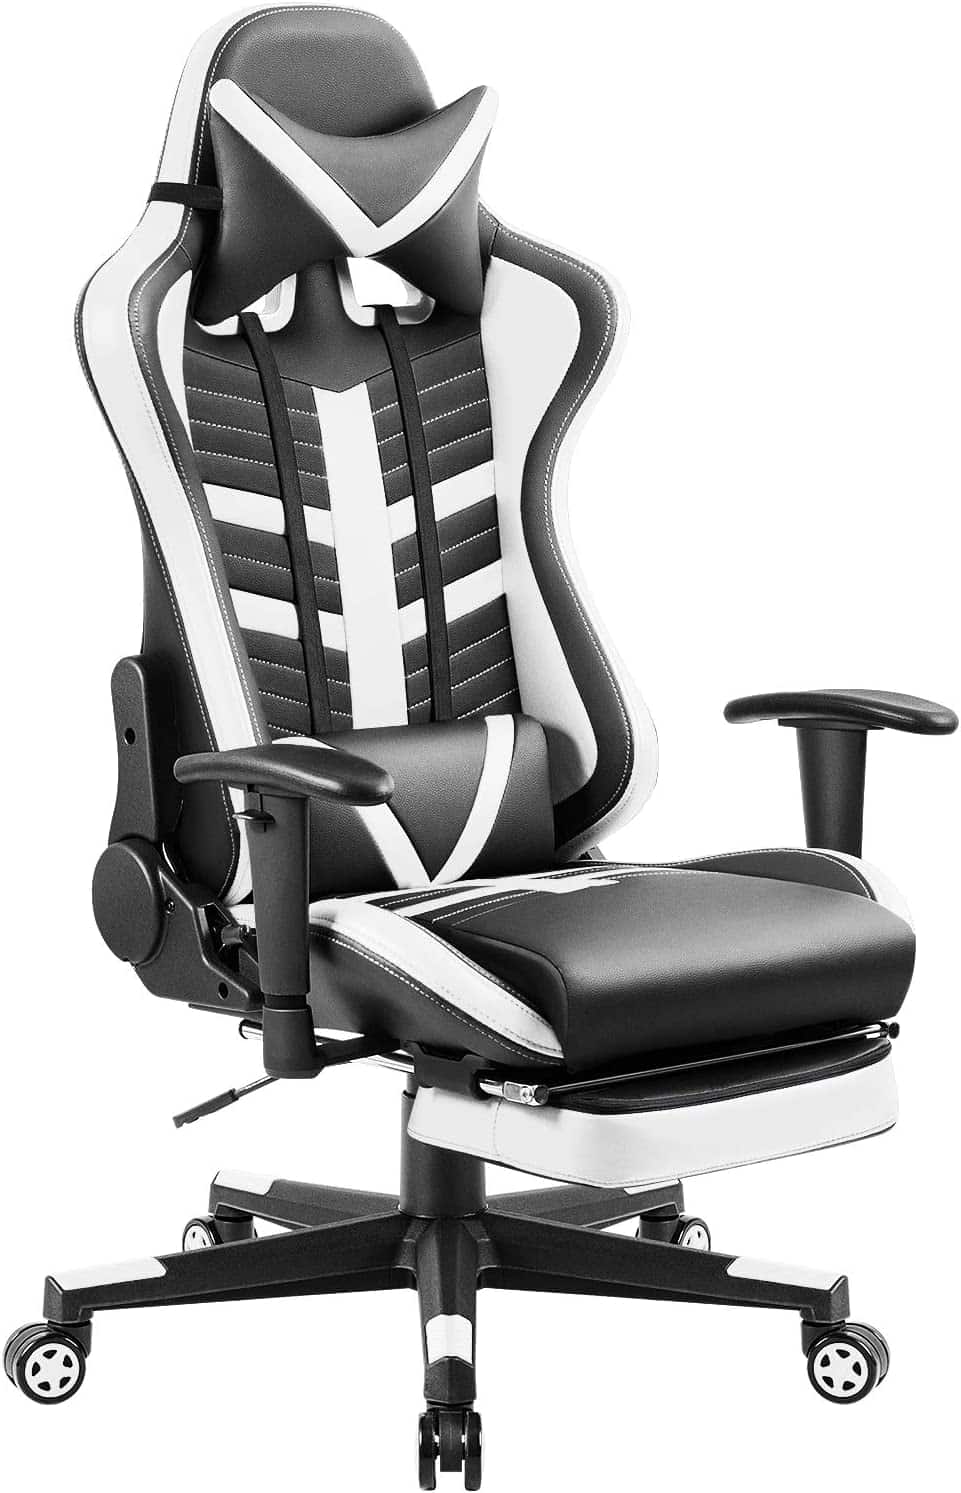 Homall Ergonomic High-Back Gaming Chair Black and White